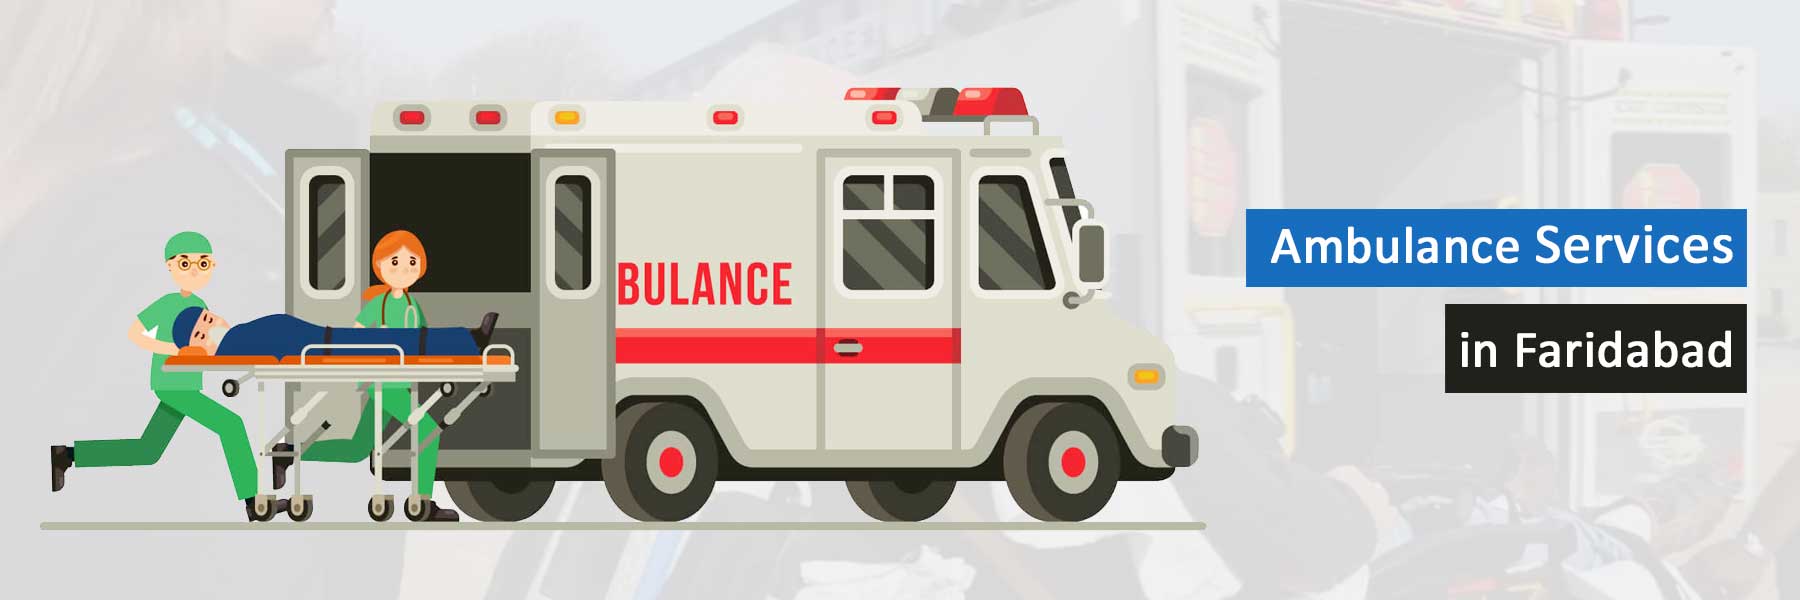 Ambulance Services in Faridabad